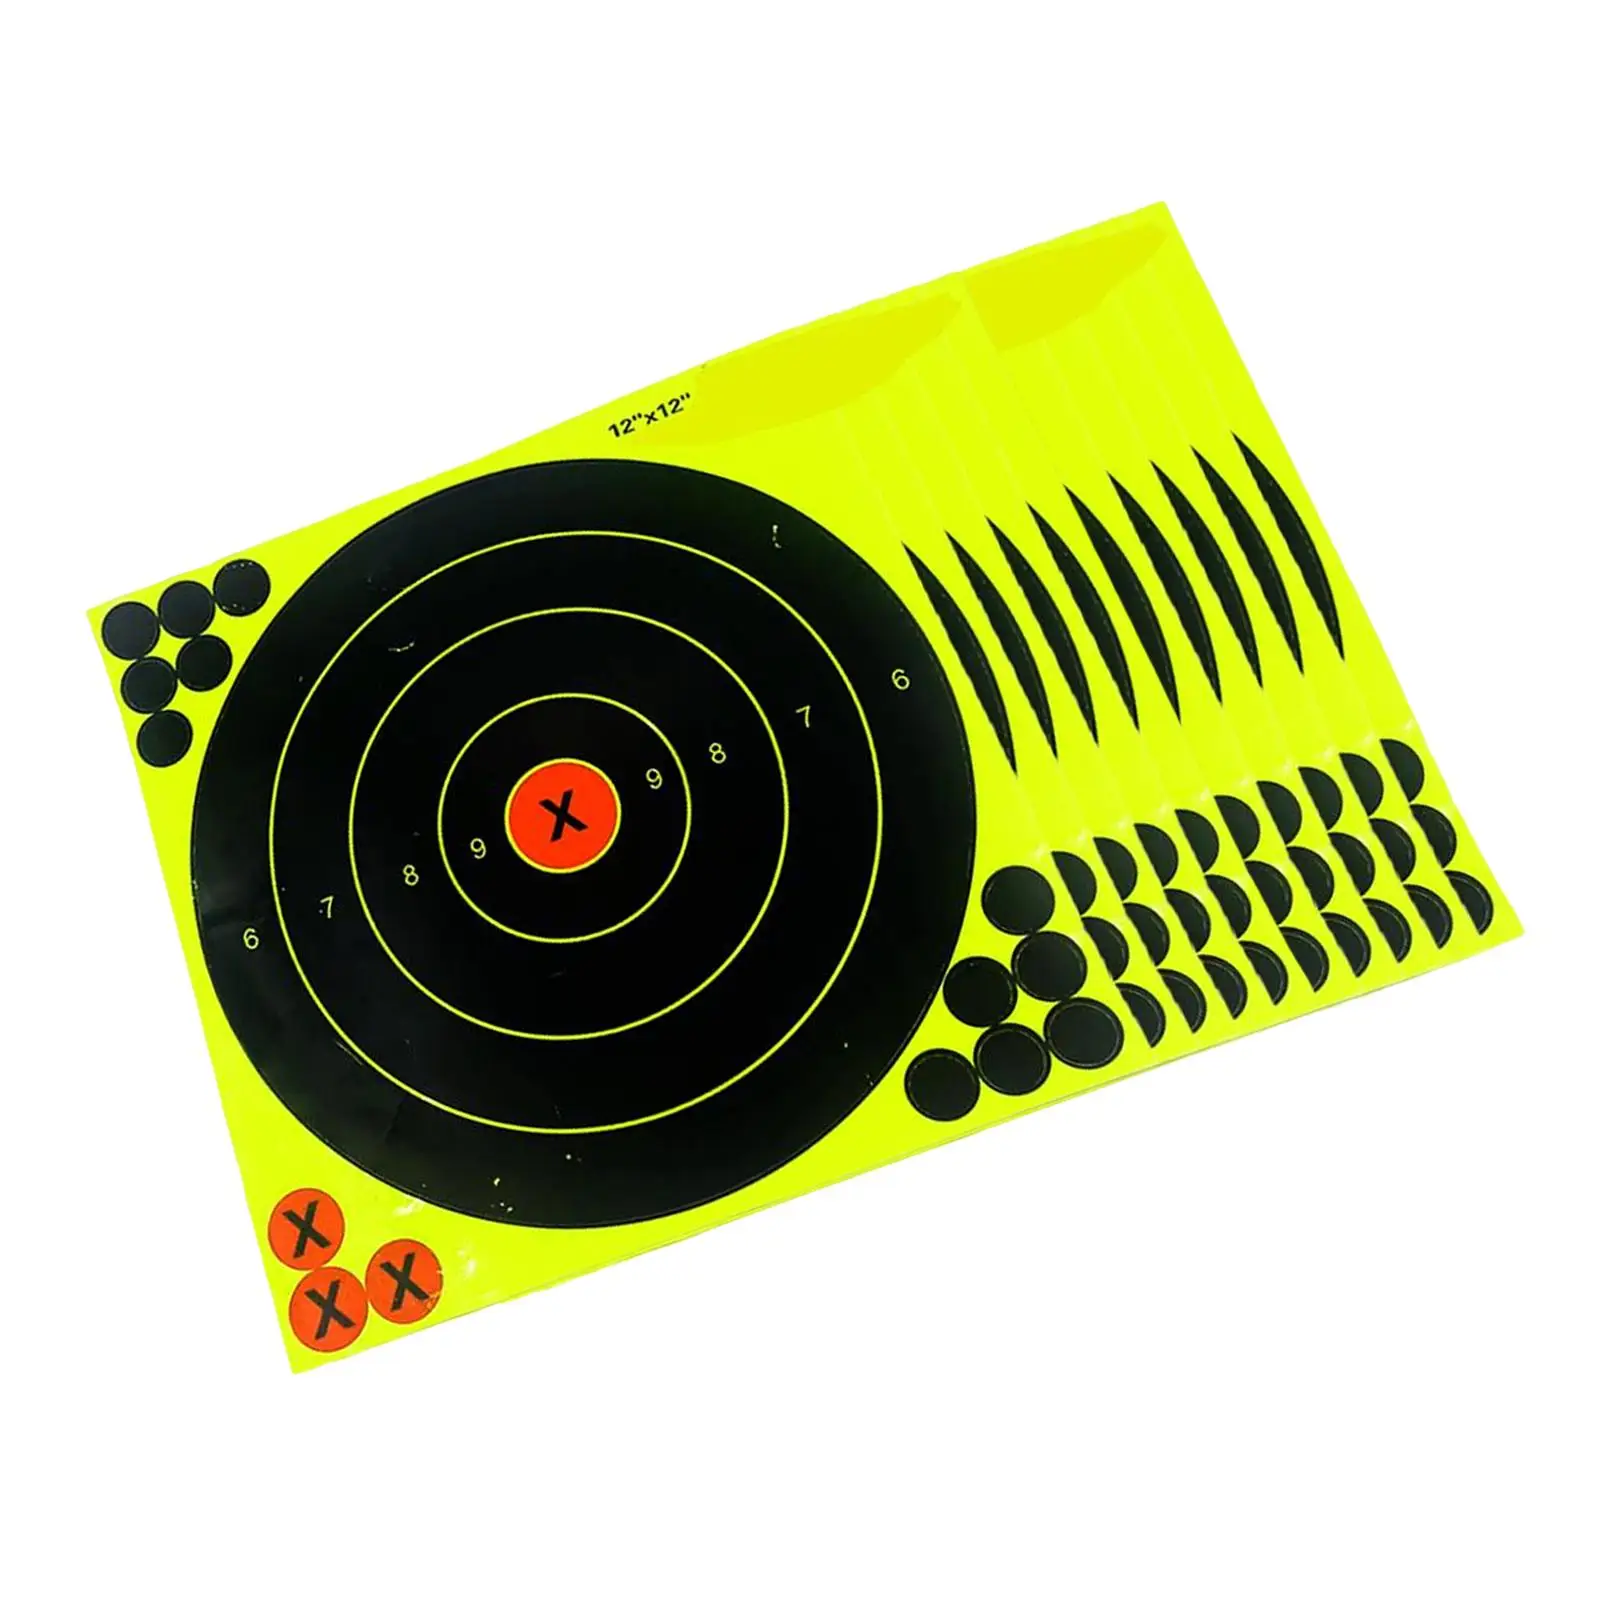 10x Shooting Targets Paper Sticker Splatter Reactive Self Adhesive Paste Paper Target for Garden Range Indoor Accessories Bow